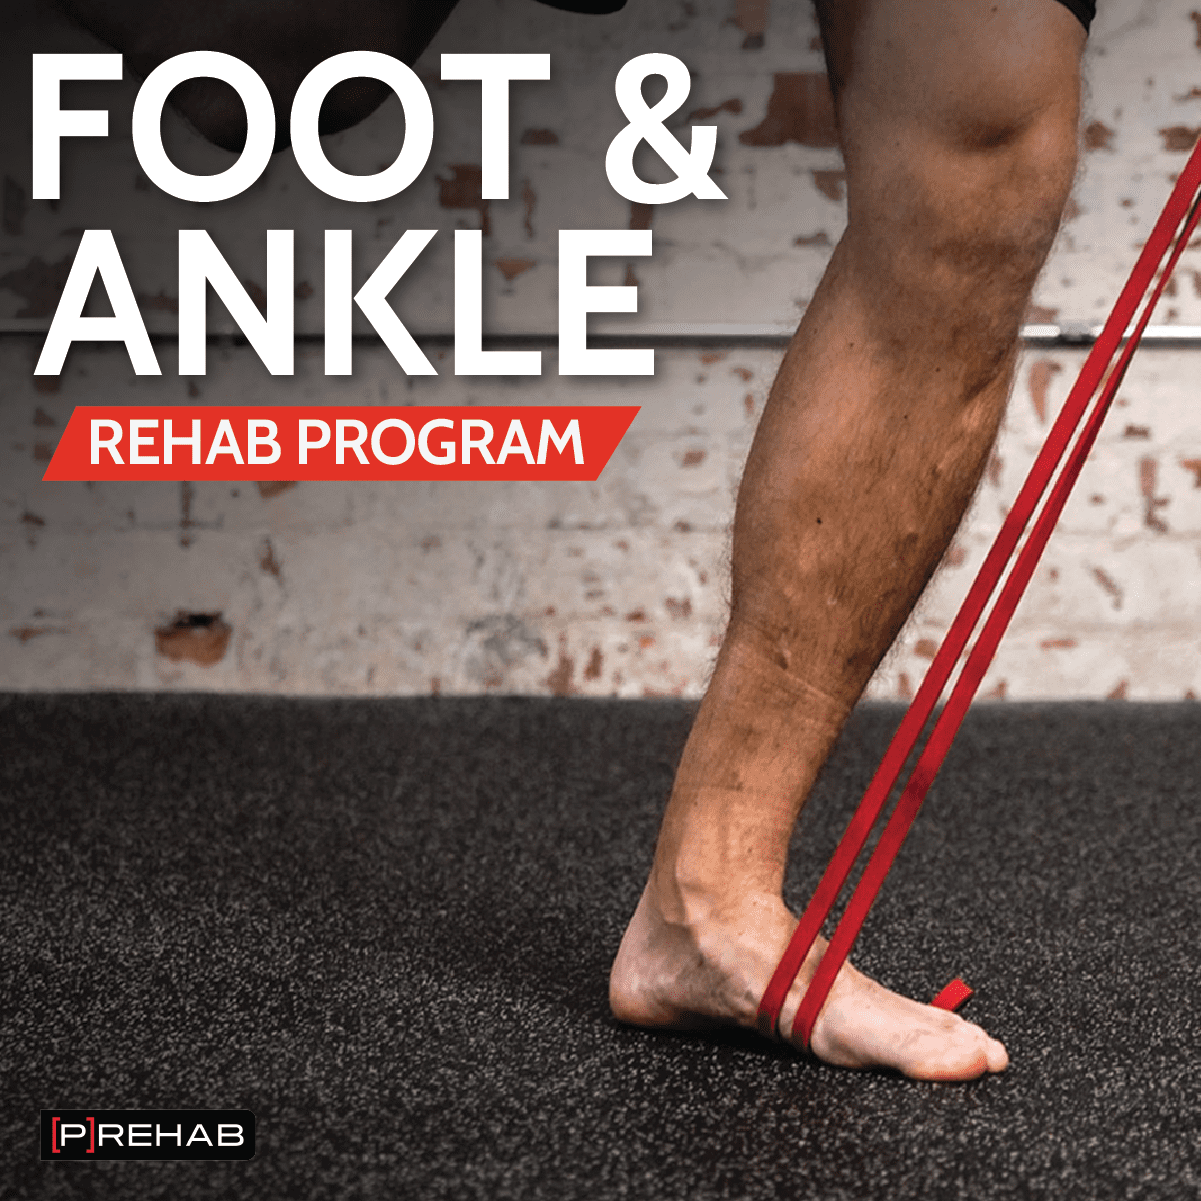 Ankle rehab